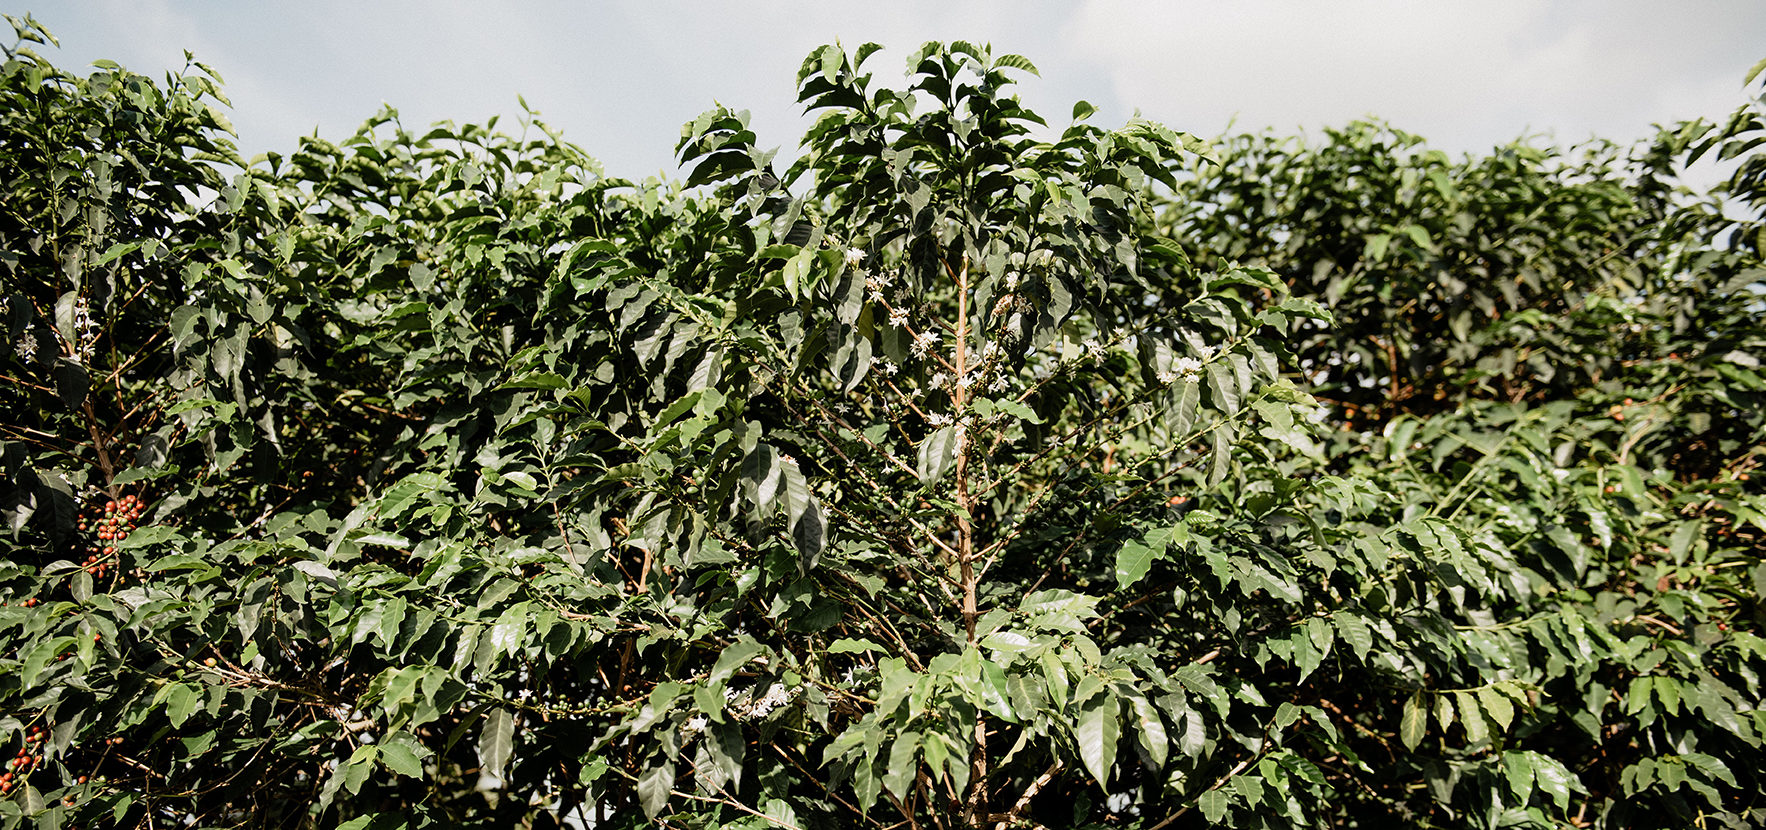 Rwandan shade-grown coffee trees at Tropic Coffee